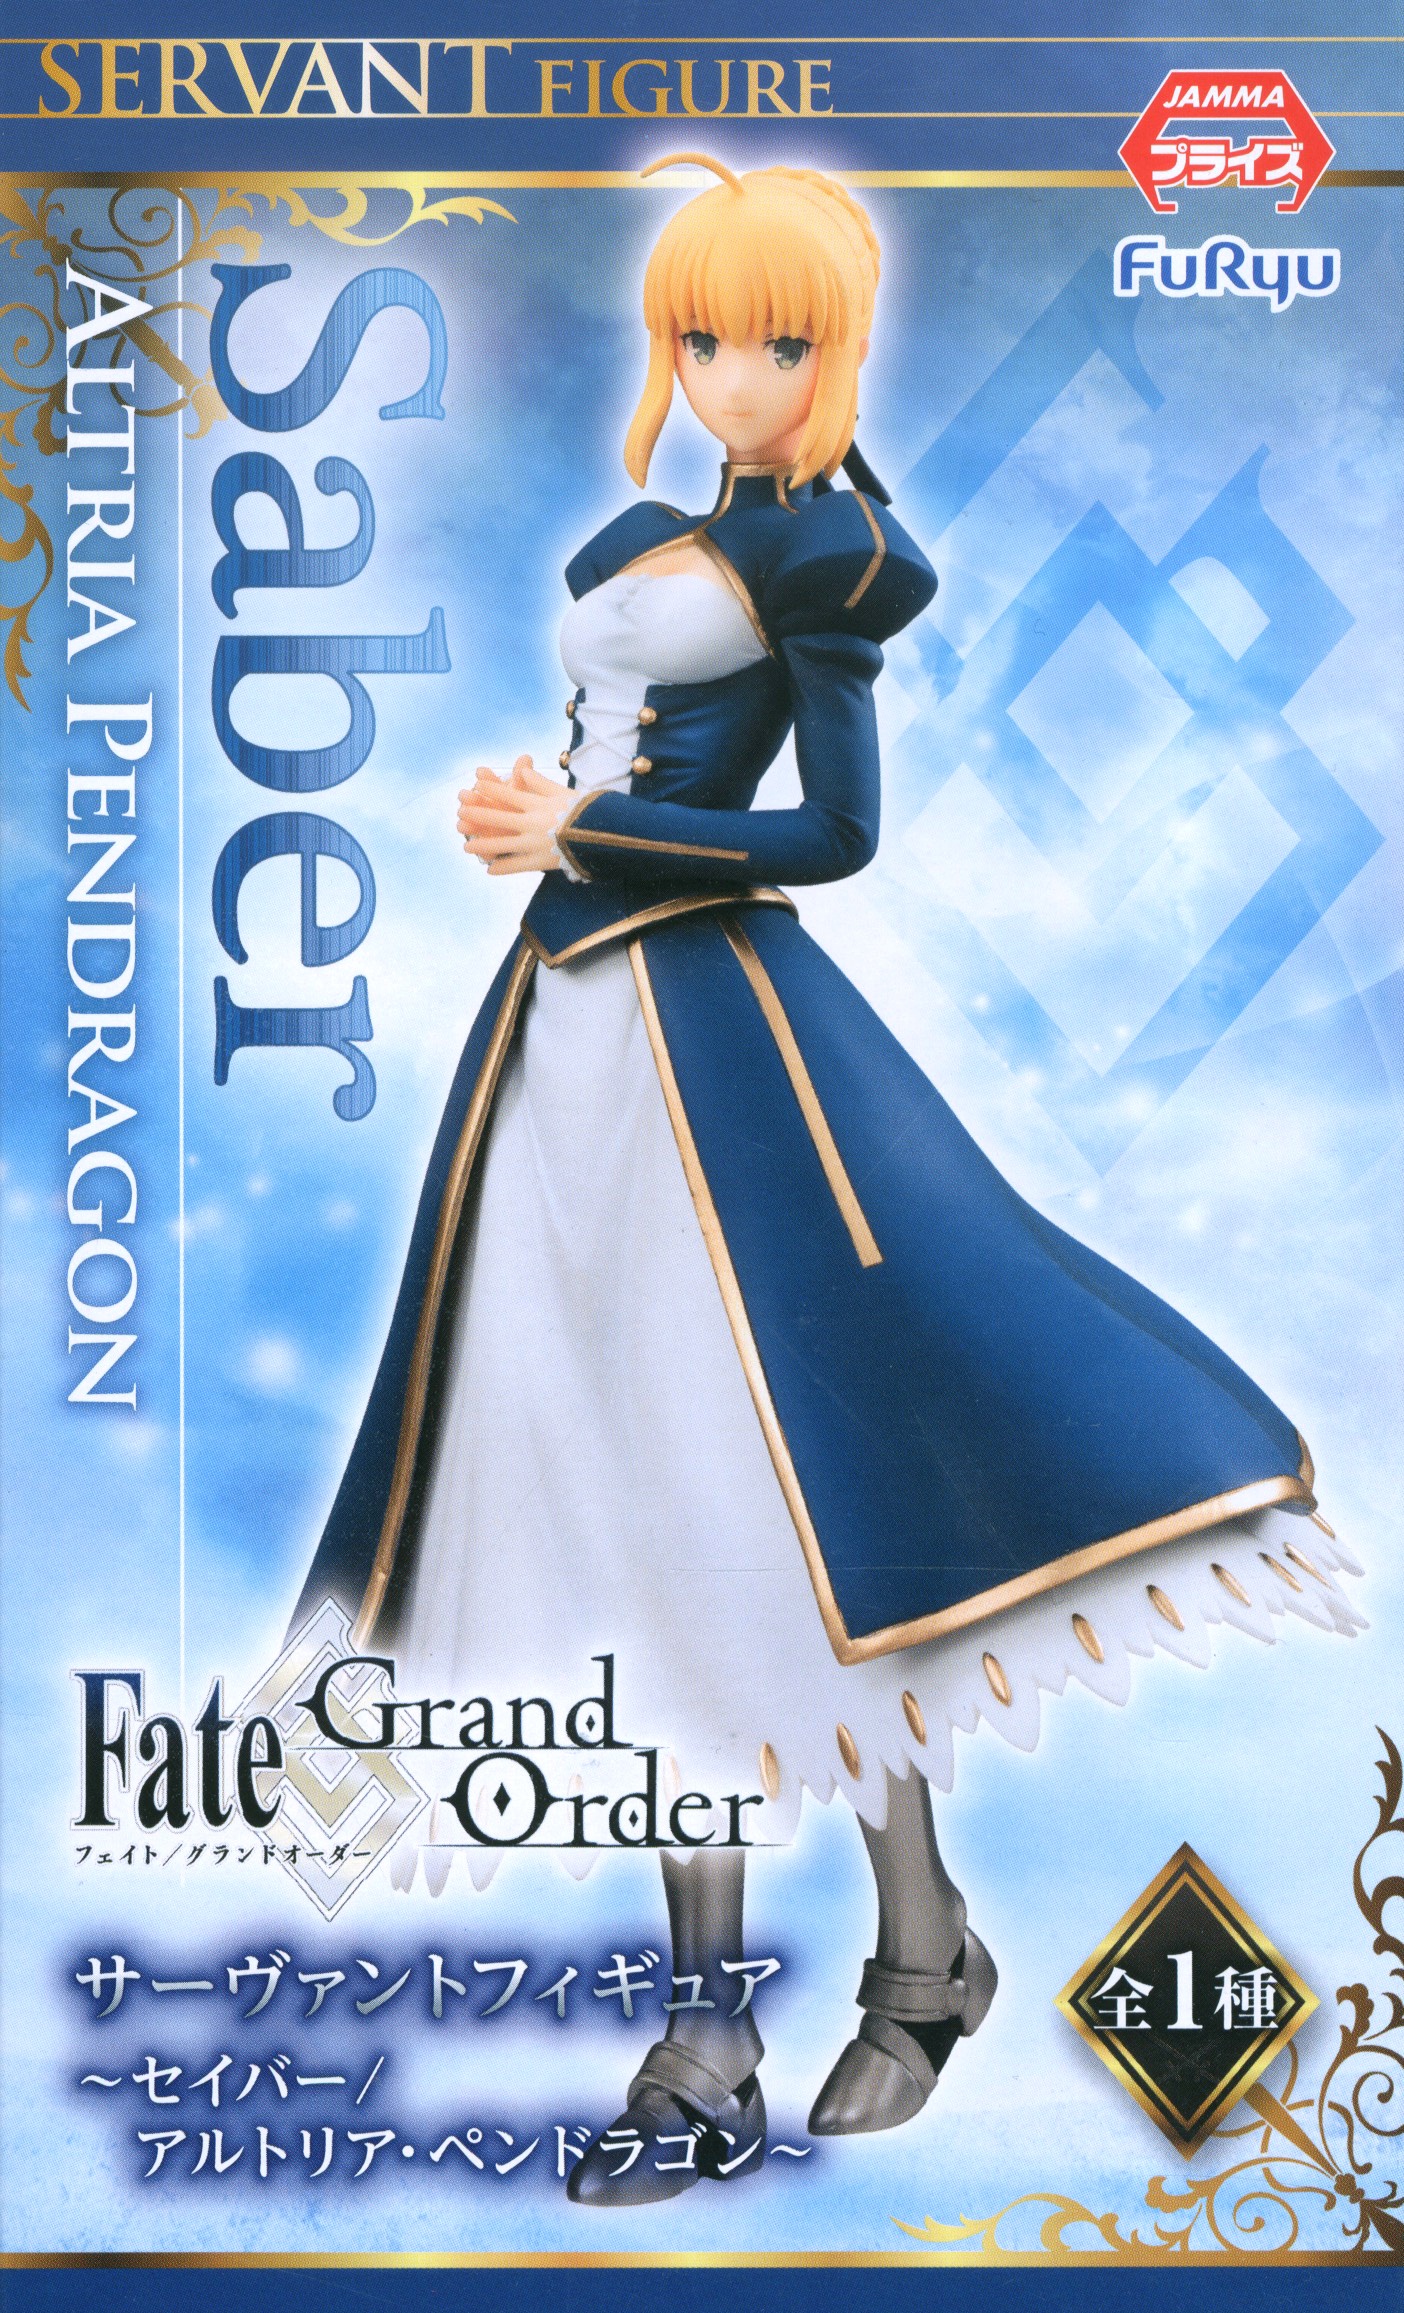 Fate/Grand Order Servant Figure Saber Artoria Pendrago | HLJ.com